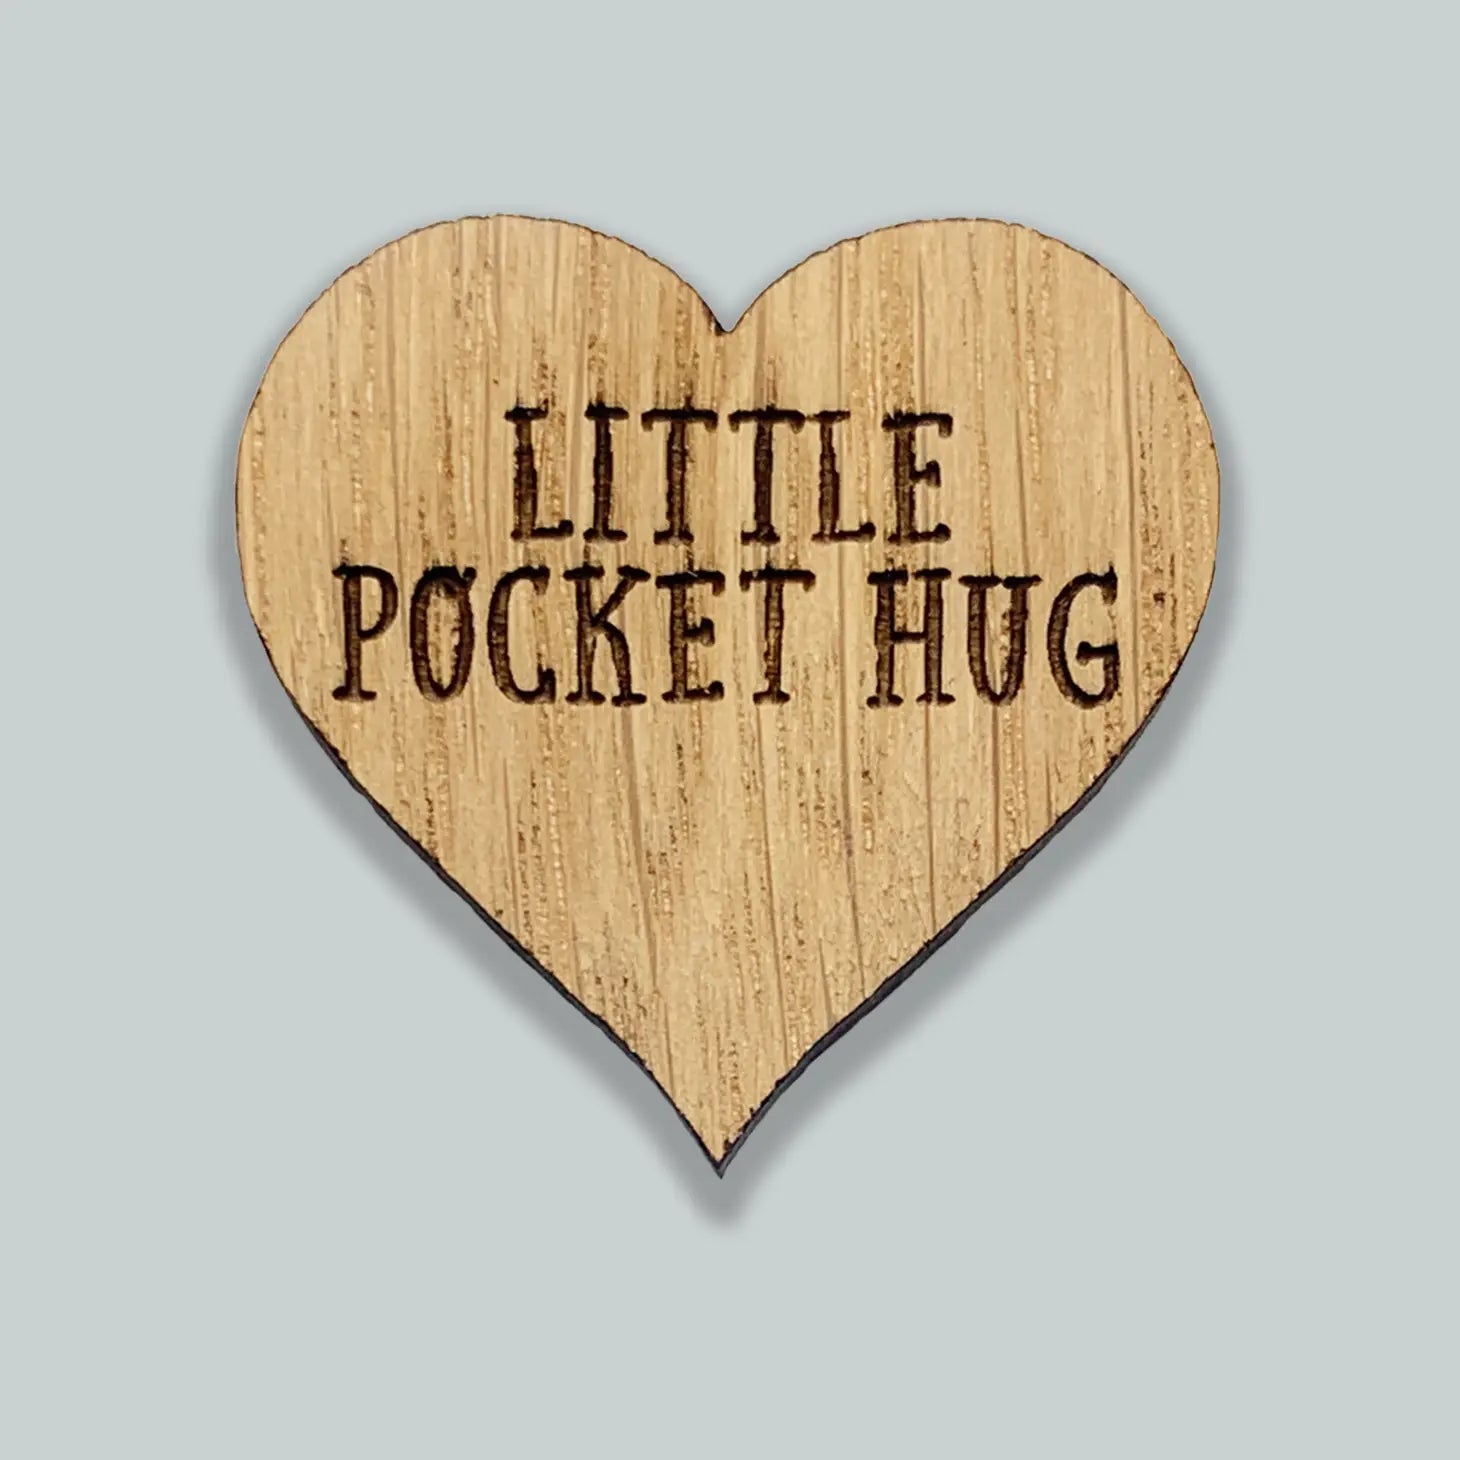 Little Pocket Hug - Heart Shaped Wooden Pocket Token